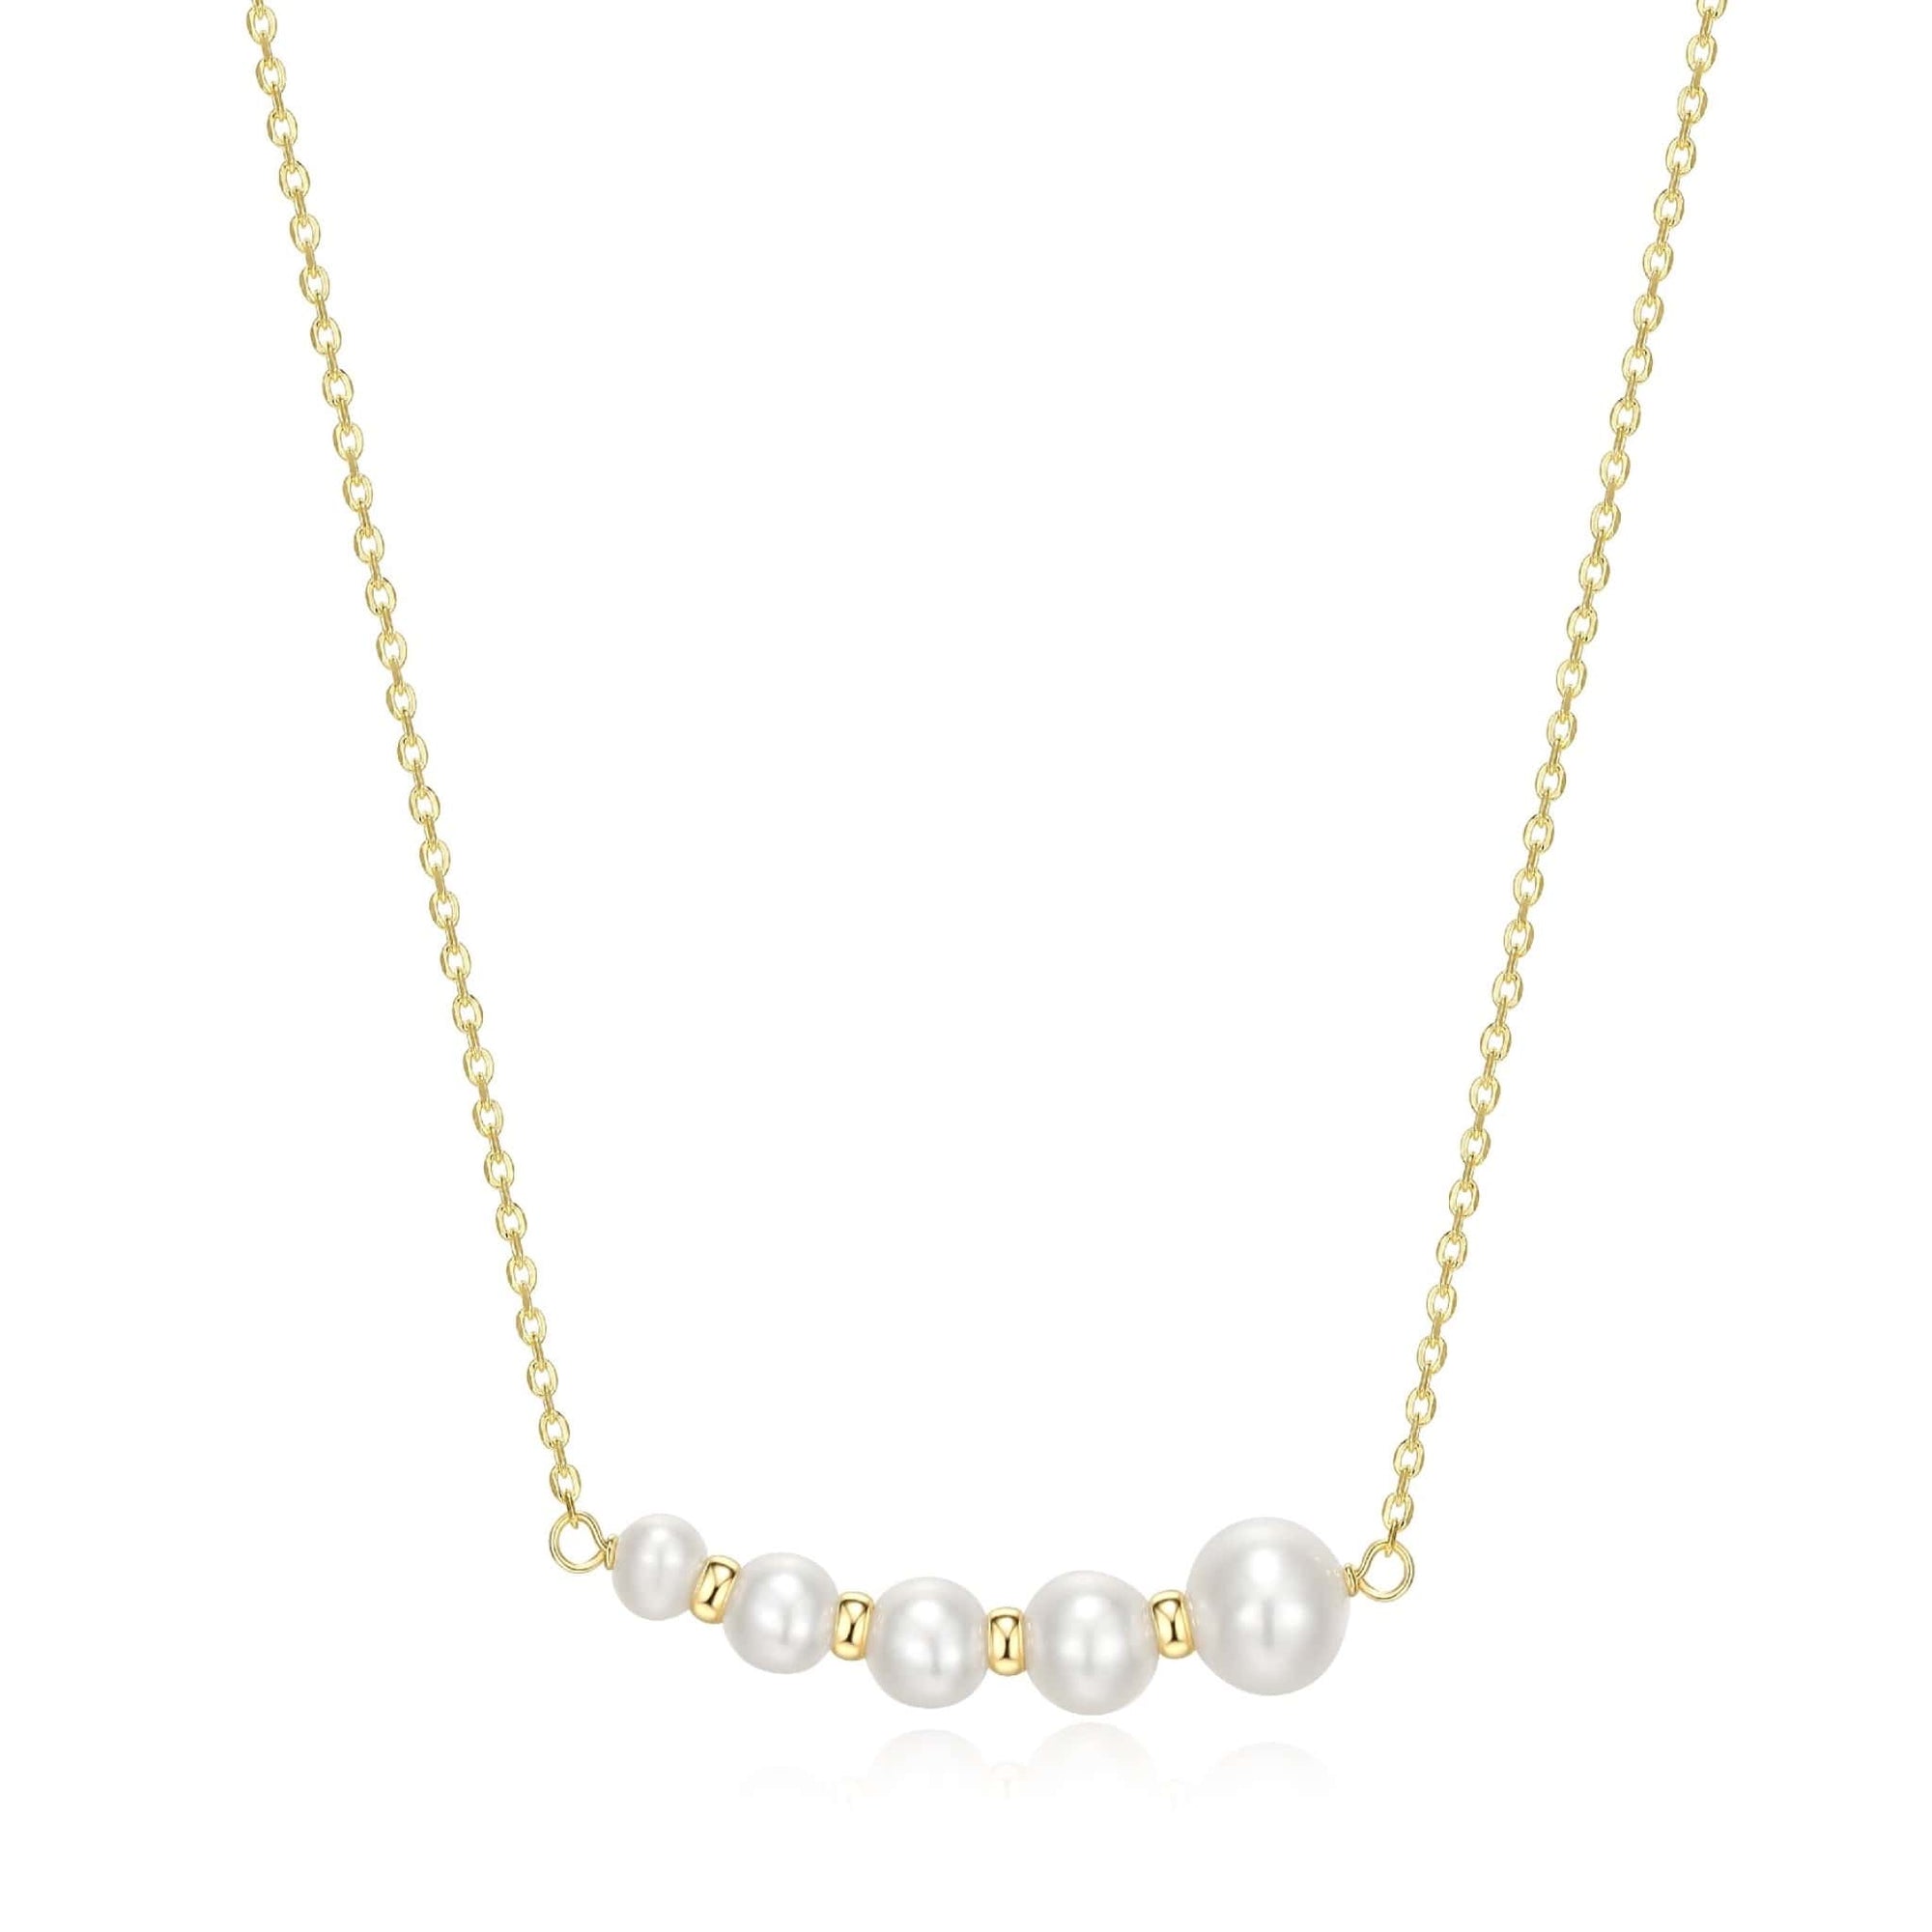 Graduated Genuine White Pearl Horizontal Bar Necklace at Arman's Jewellers Kitchener